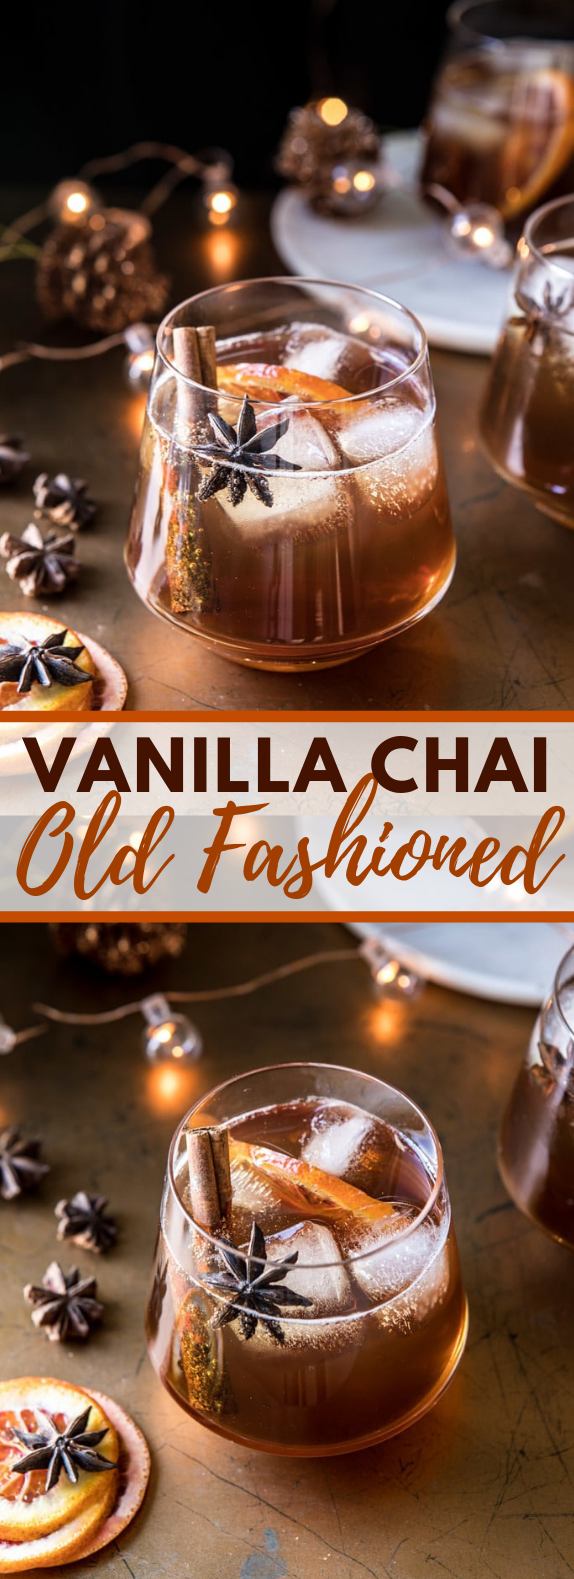 Vanilla Chai Old Fashioned #drink #cocktails